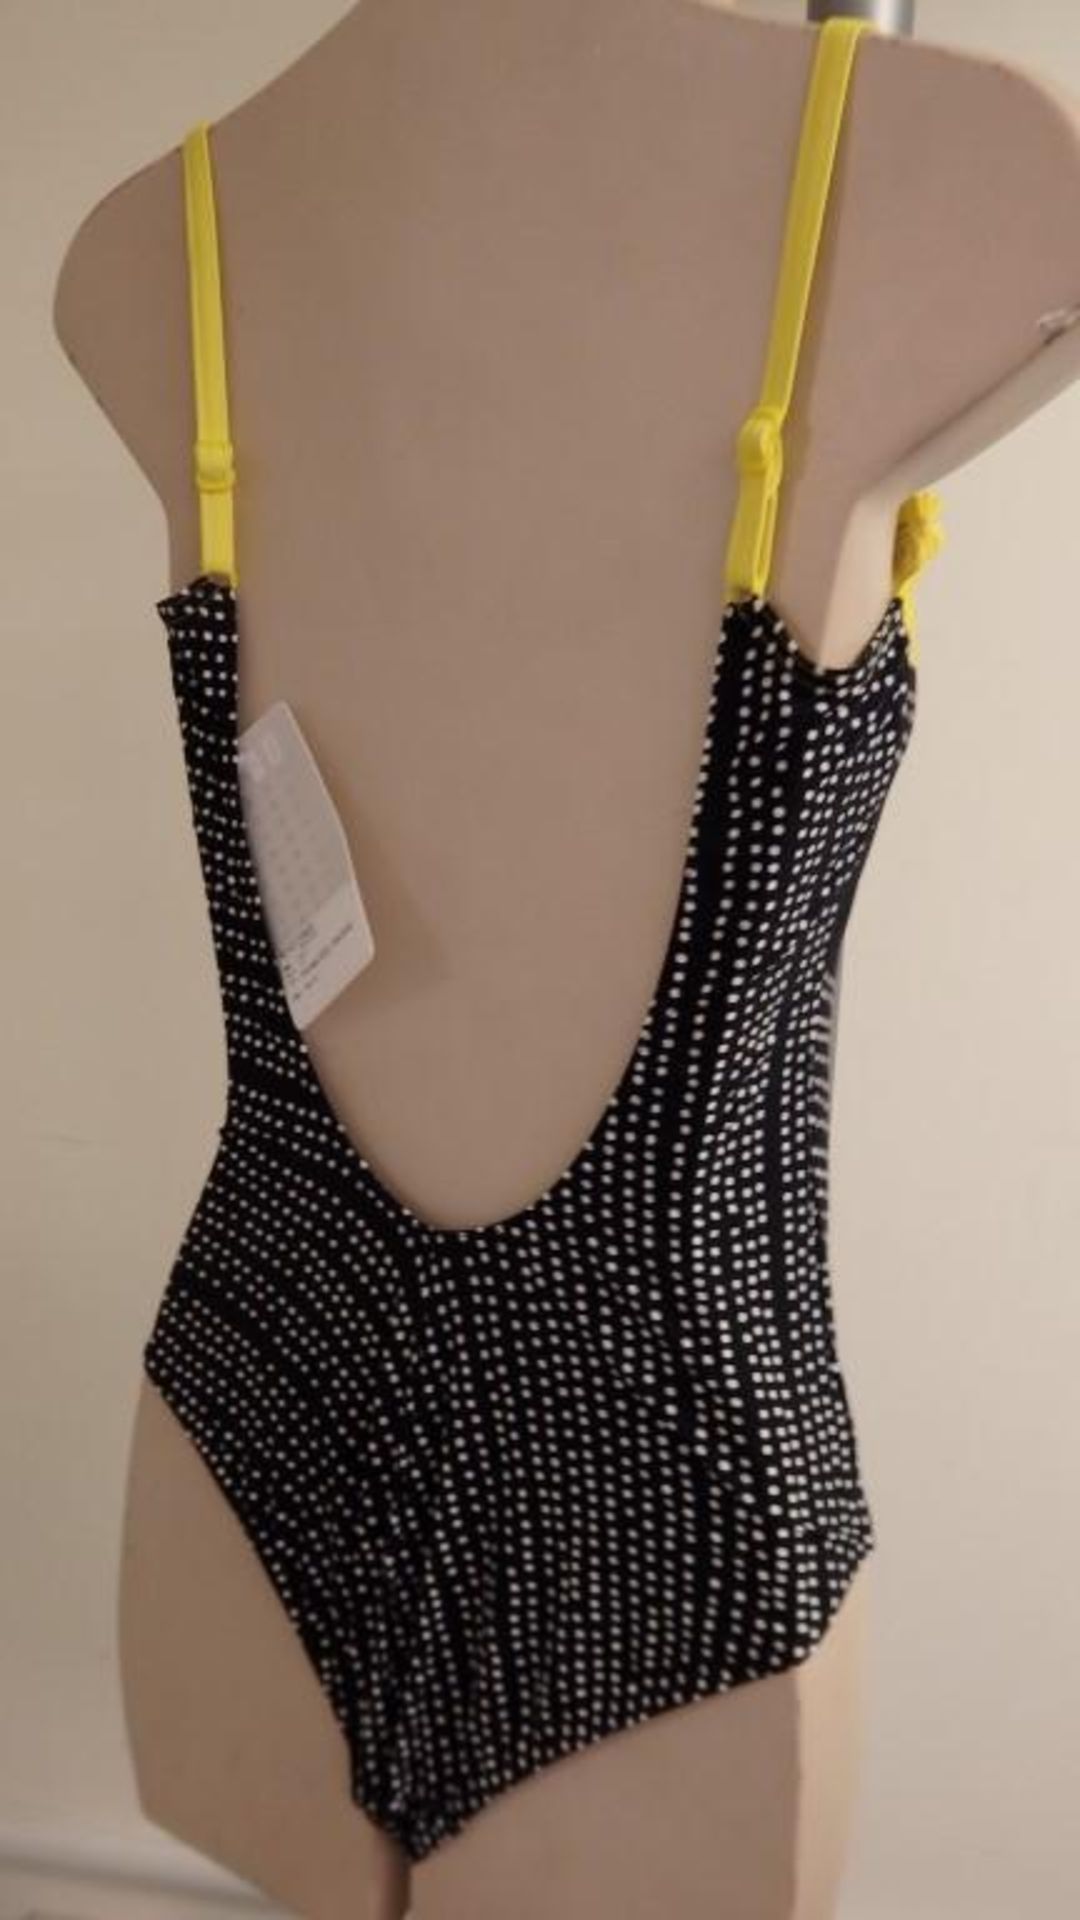 1 x Rasurel - Black Polka dot with canary yellow trim & frill Tobago Swimsuit - R21031 - Size 2 - UK - Image 2 of 8